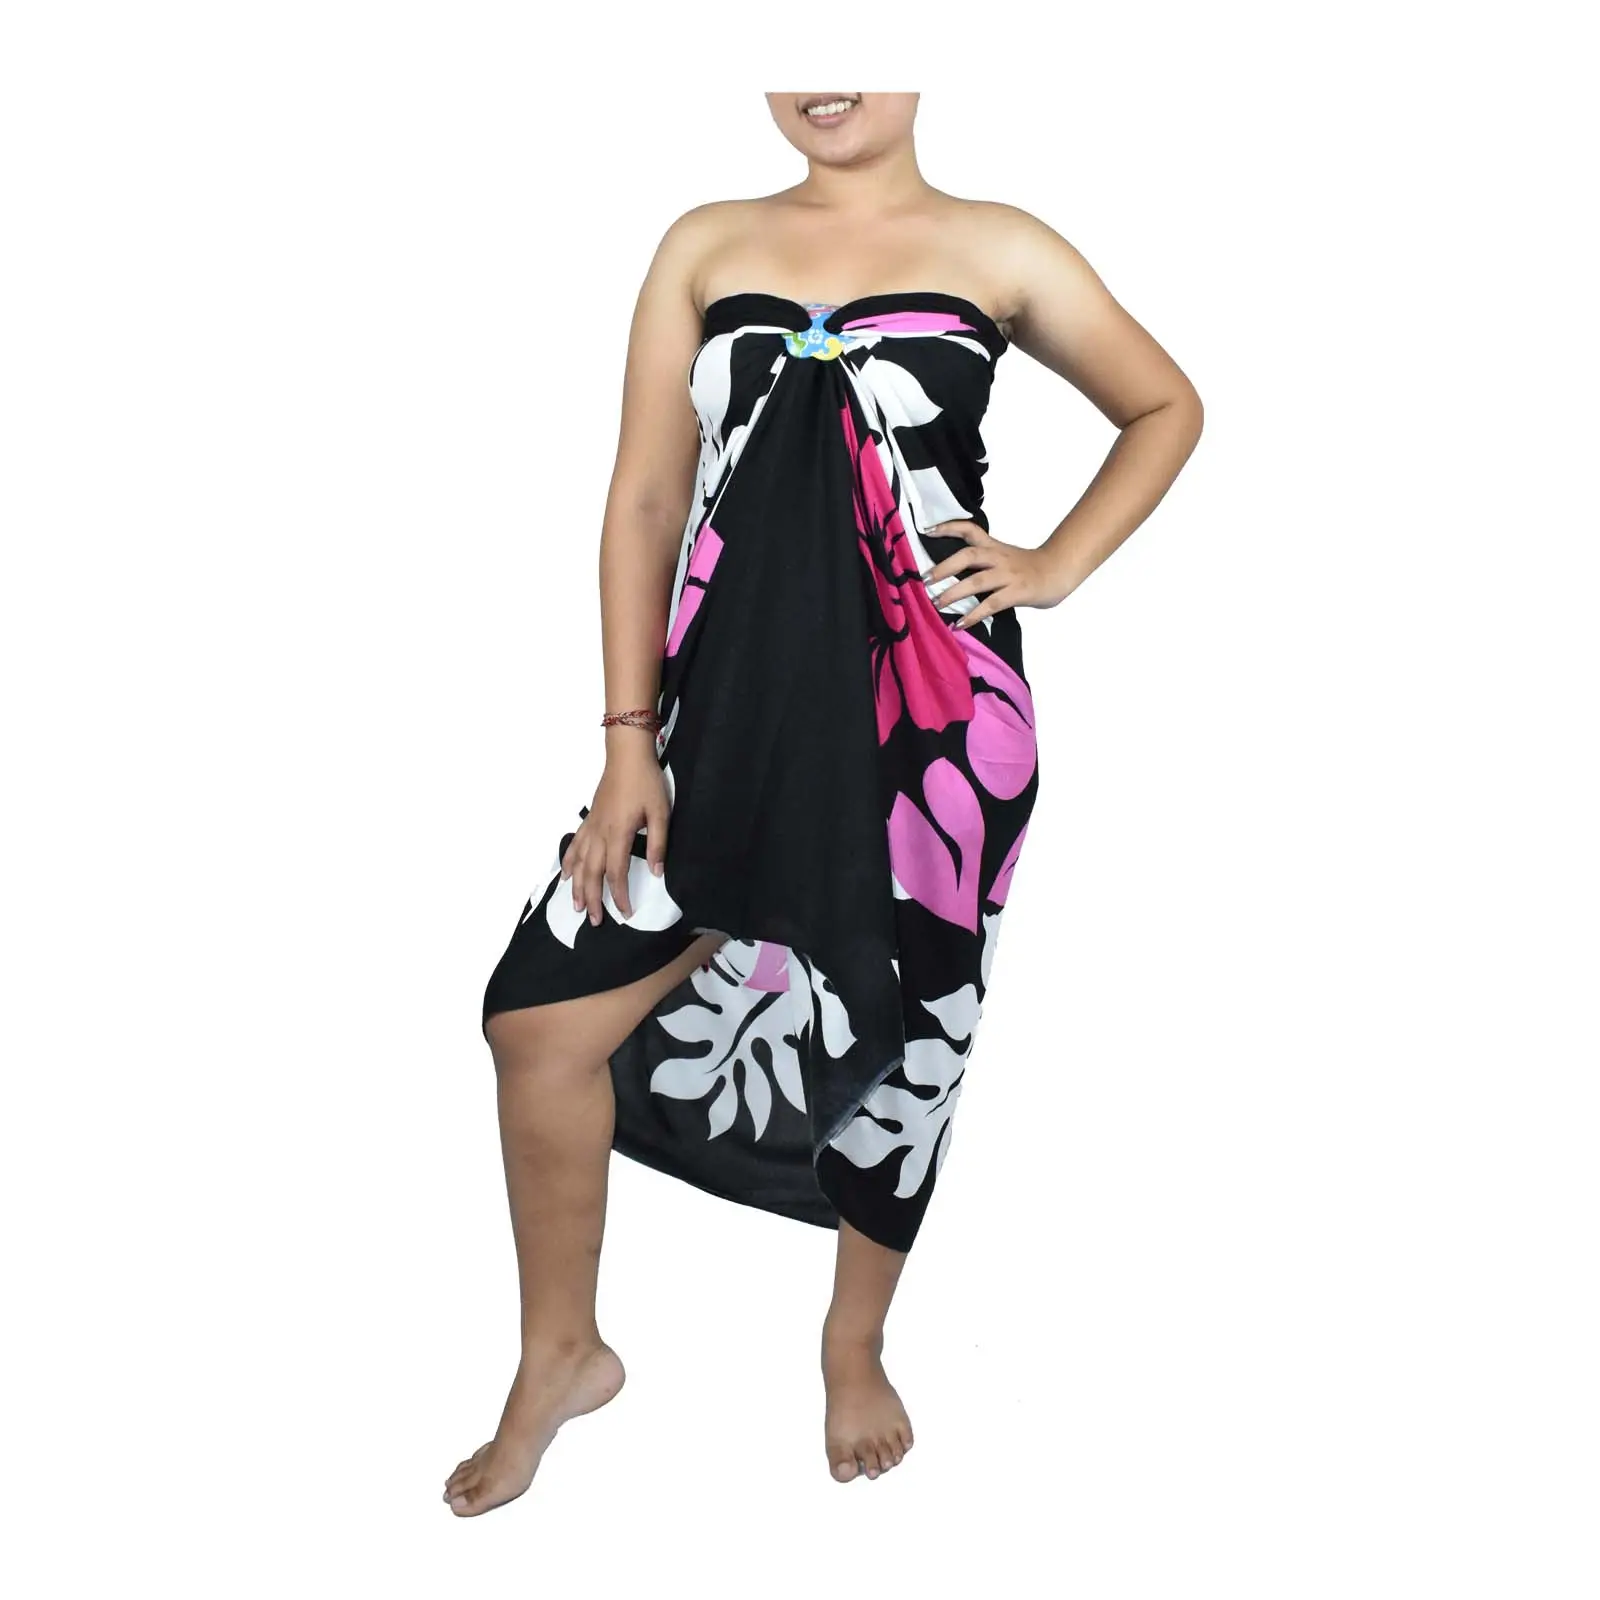 Vestido de praia de rayon, atacado, roupa de banho feminina, sarongue, com estampa de flores, hibiscus